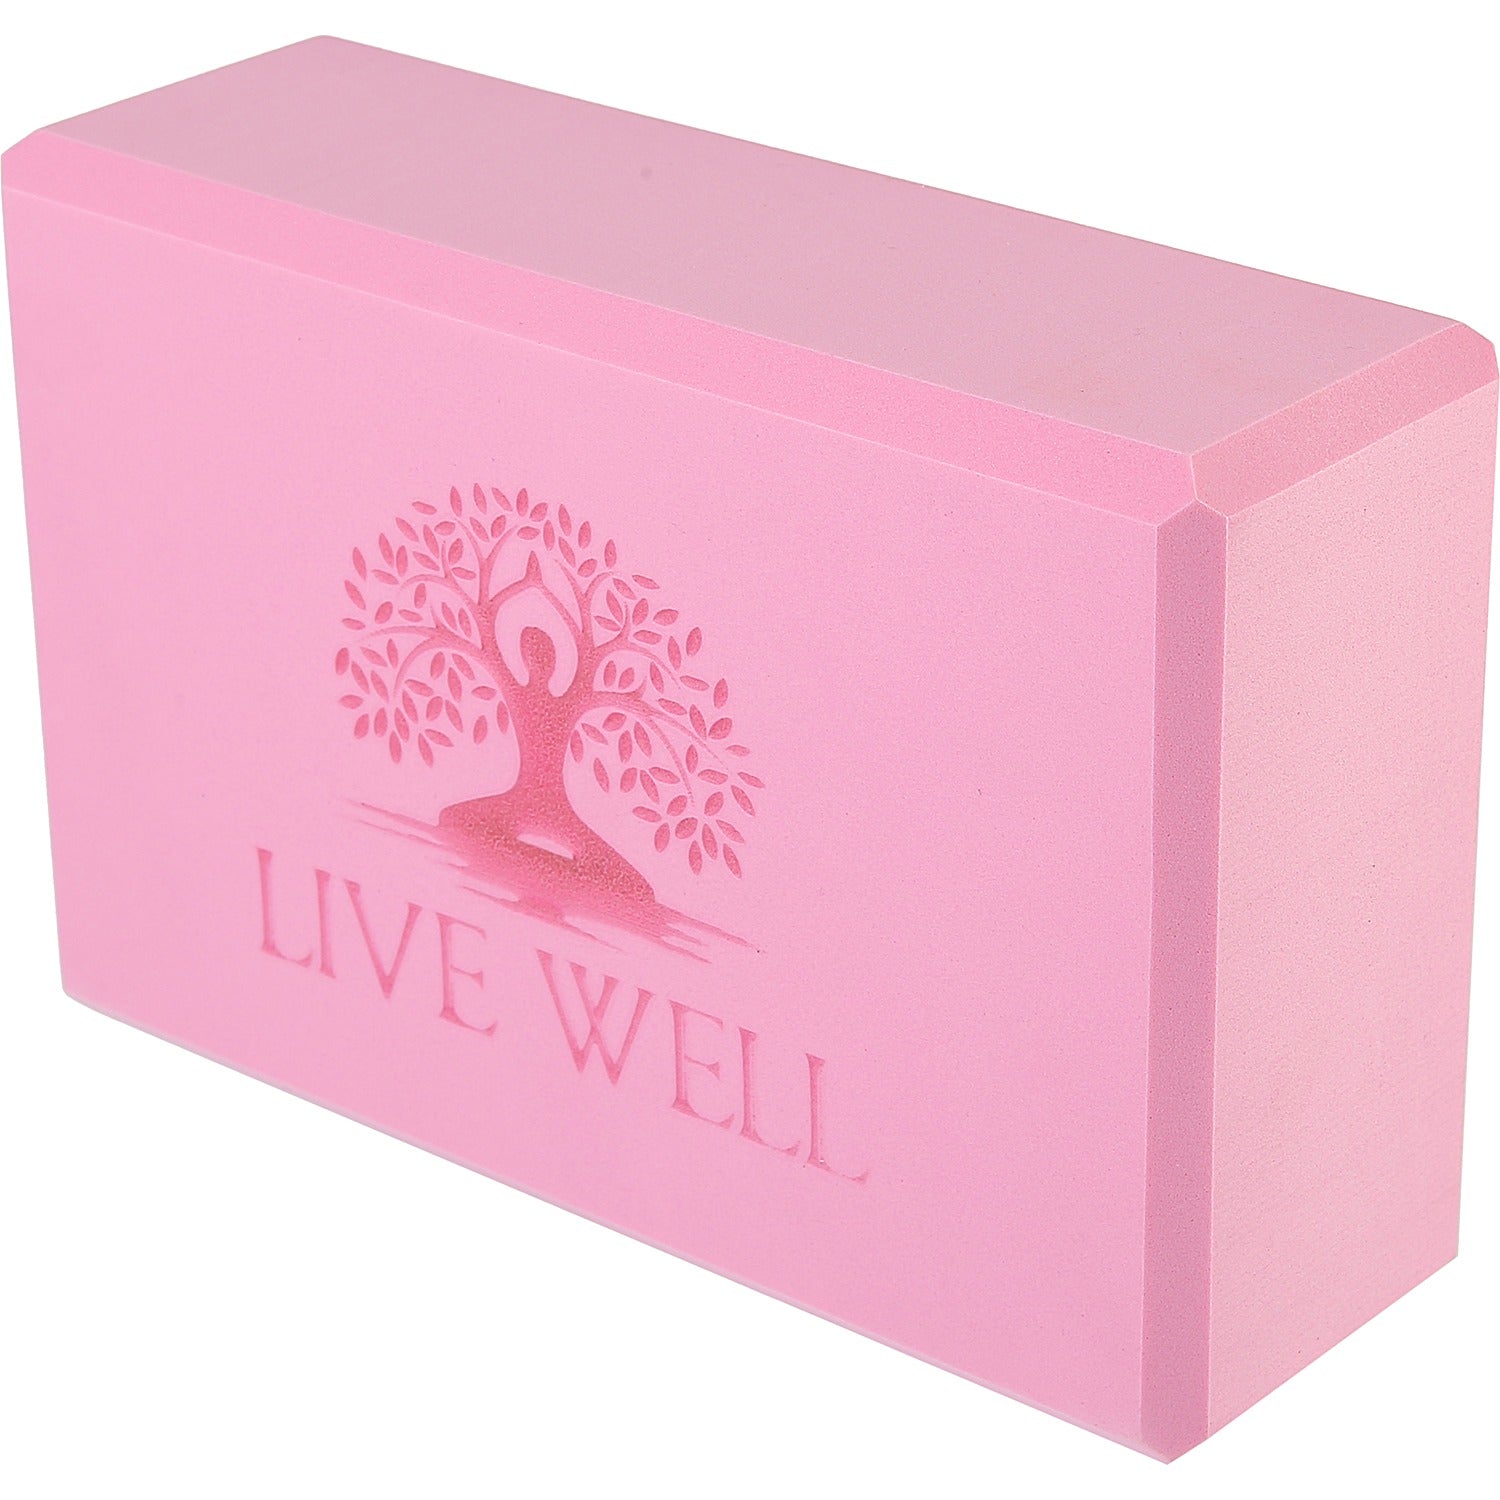 LIVE WELL Pink EVA Yoga Block - 3x6x9 inches – Moore Health & Wellness  L.L.C.